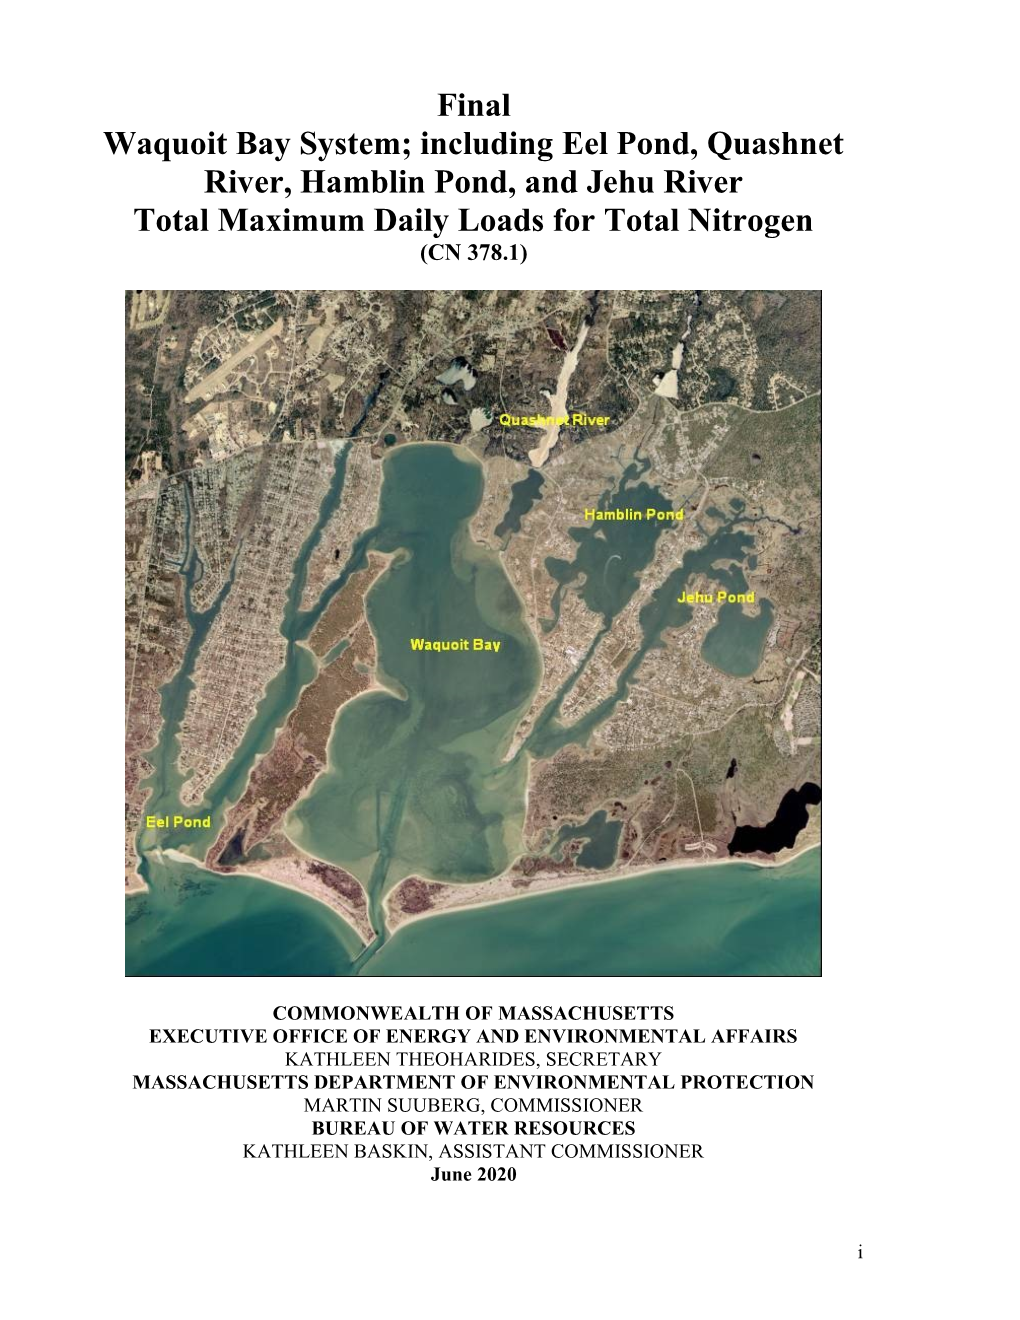 Final Waquoit Bay System; Including Eel Pond, Quashnet River, Hamblin Pond, and Jehu River Total Maximum Daily Loads for Total Nitrogen (CN 378.1)